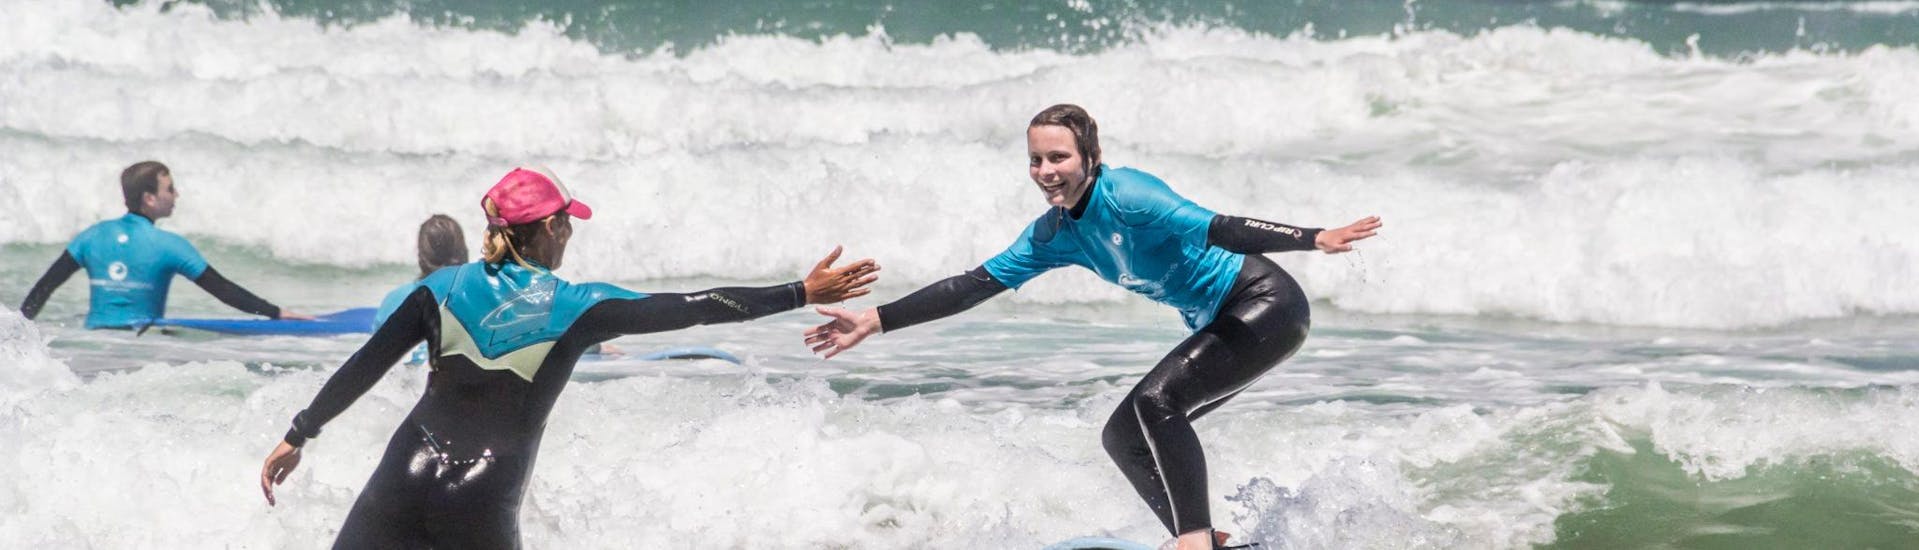 Lezioni private di surf a Sagres da 12 anni per tutti i livelli.